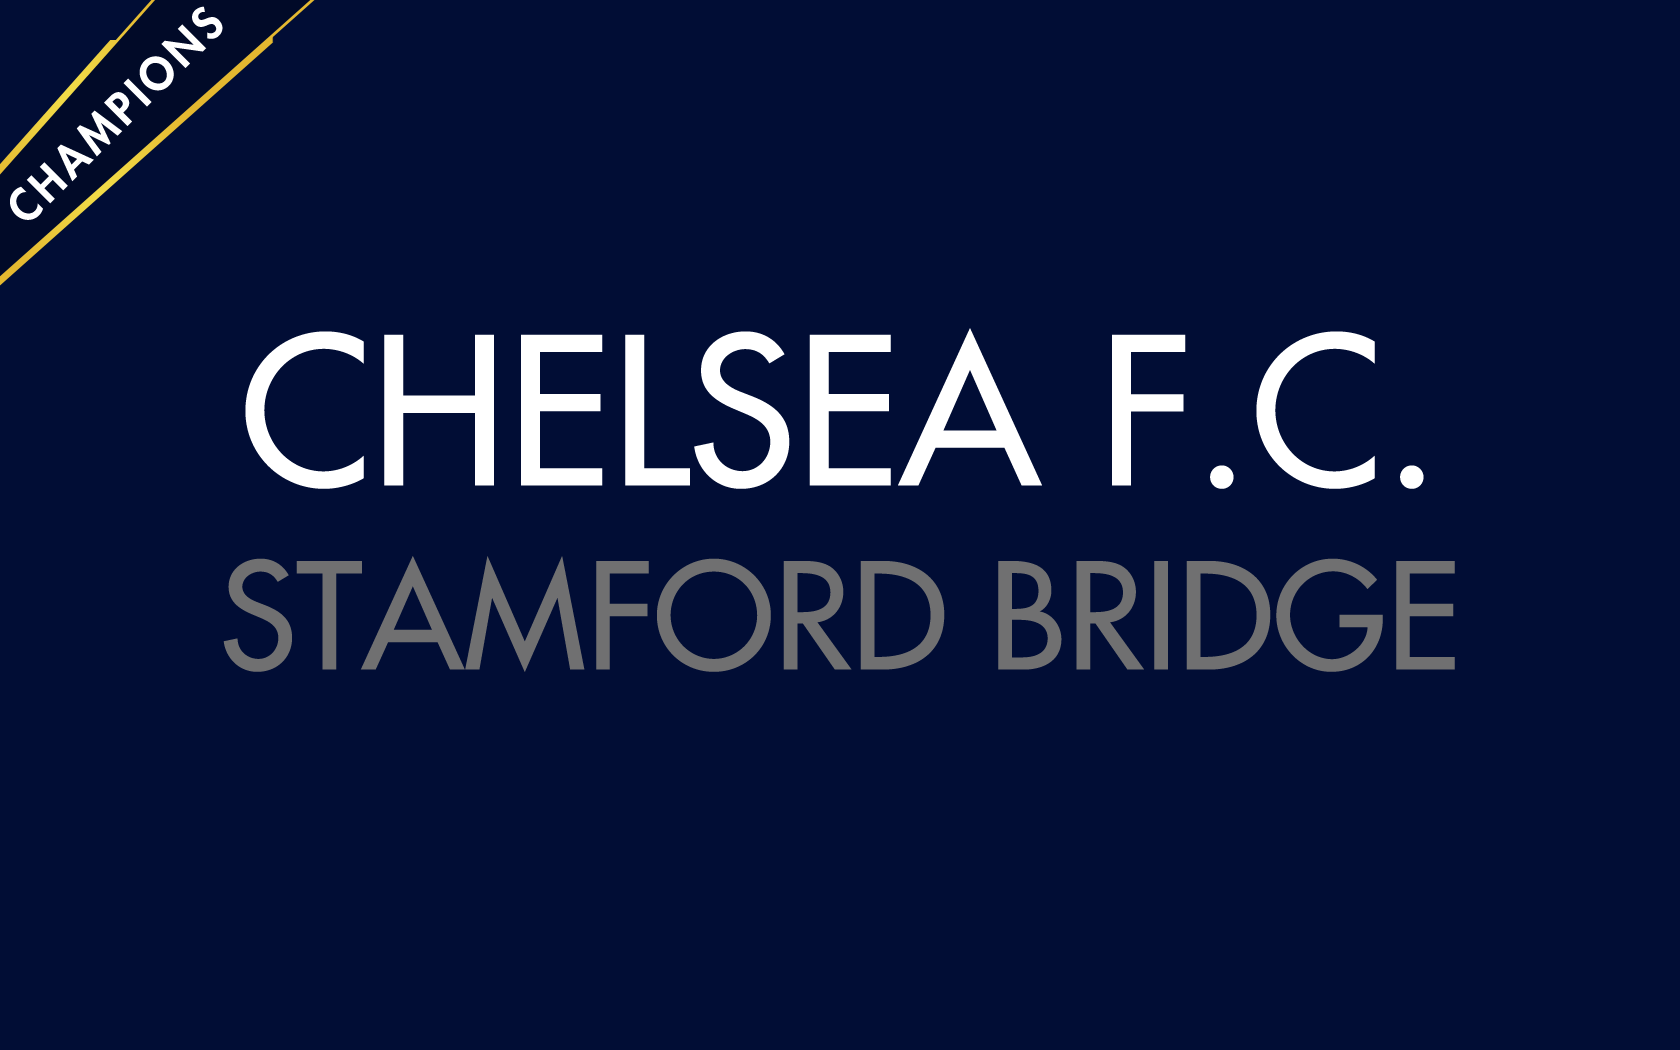 Fabulous Stamford Bridge Wallpaper in High Definition